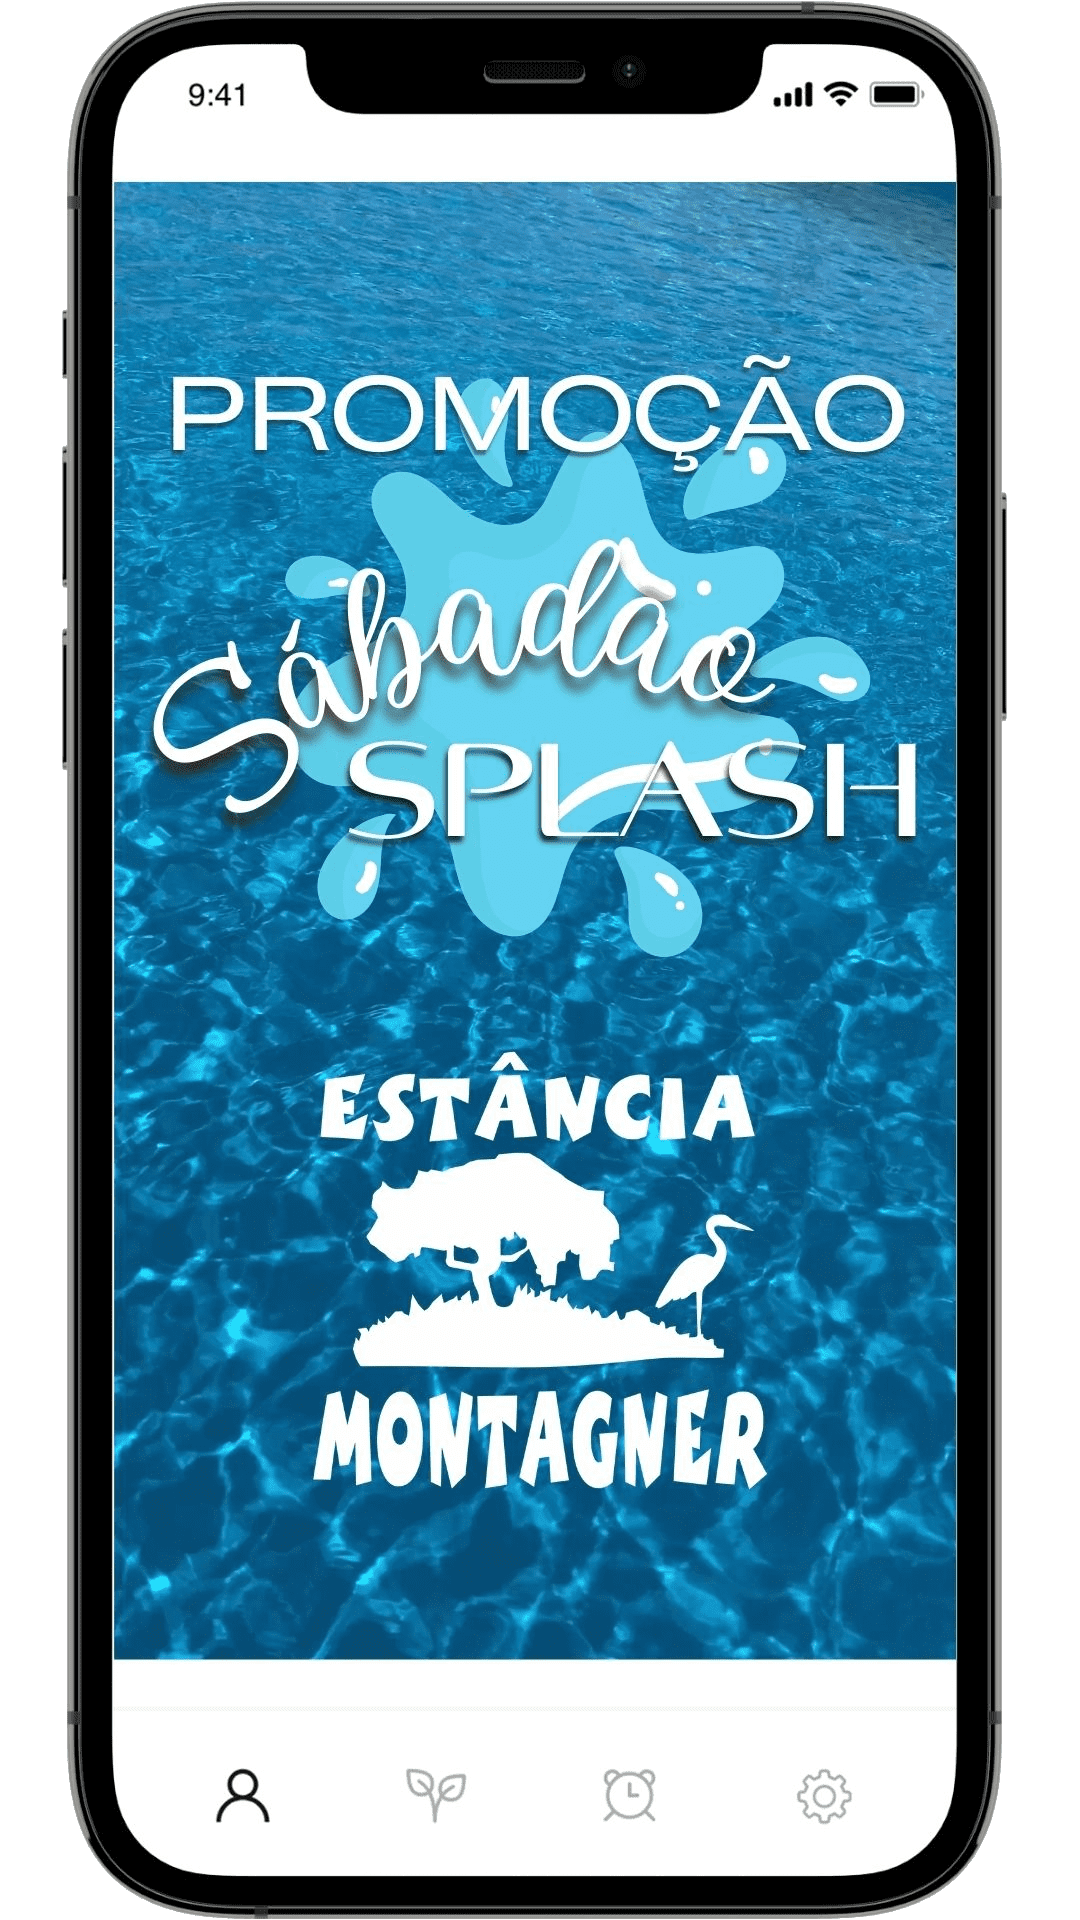 promo sabadao splash estancia montagner